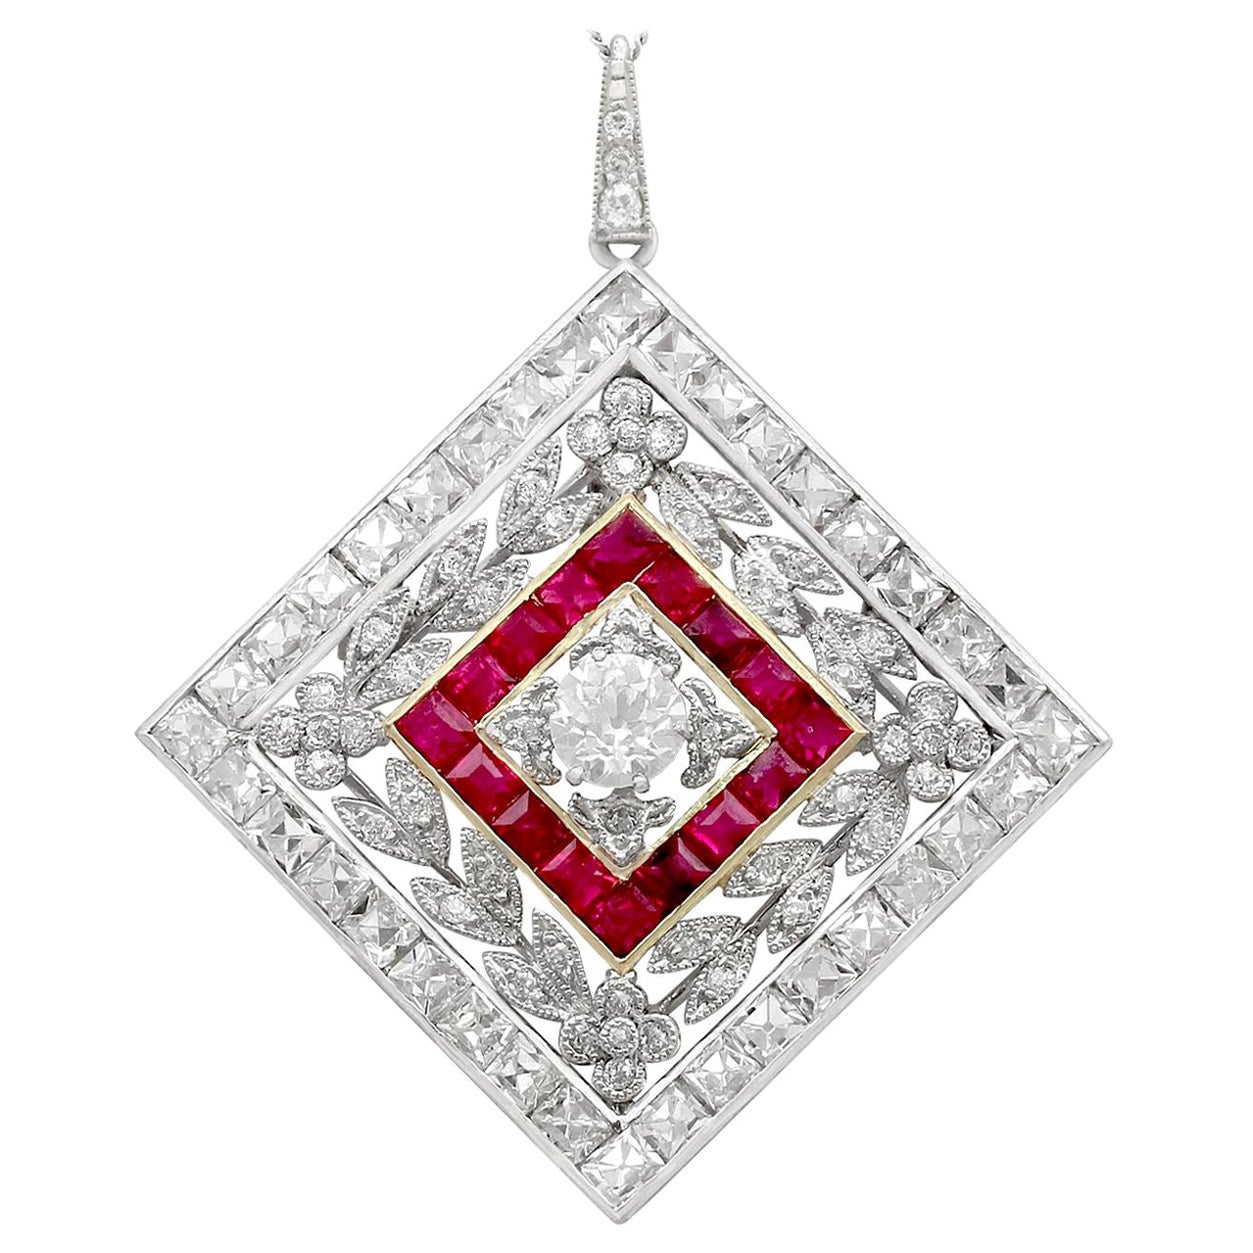 Antique 1900s Ruby 3.48 Carat Diamonds Gold Platinum Pendant Brooch For Sale